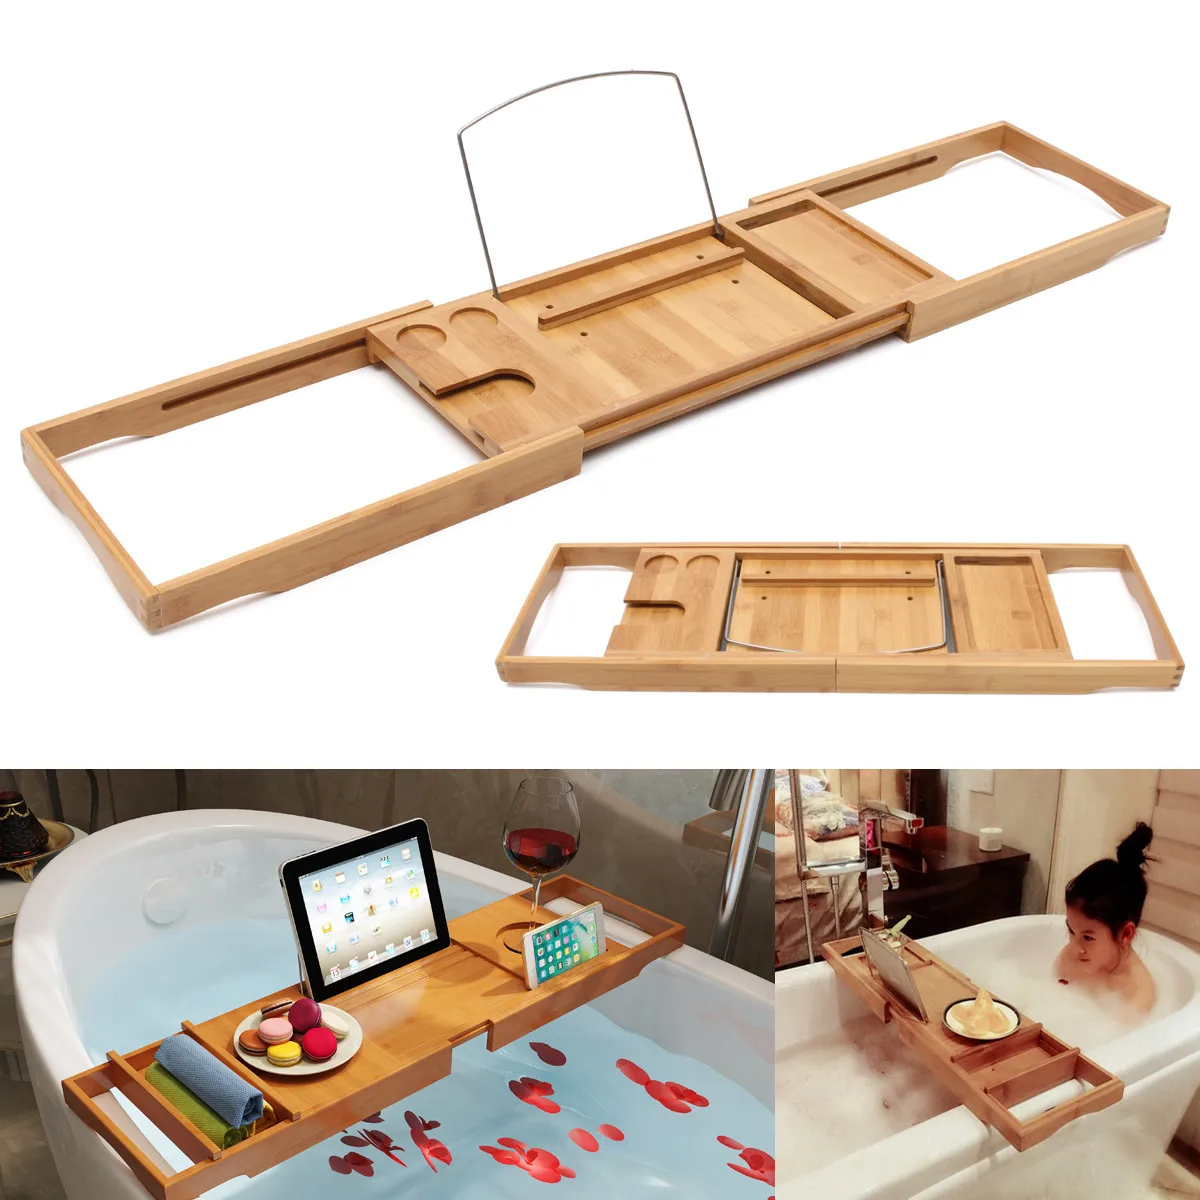 

70-105cm Extendable Bamboo Bath Caddy Tray Adjustable Home Spa Wooden Bathtub Tray Book Wine Tablet Holder Reading Rack Shelf